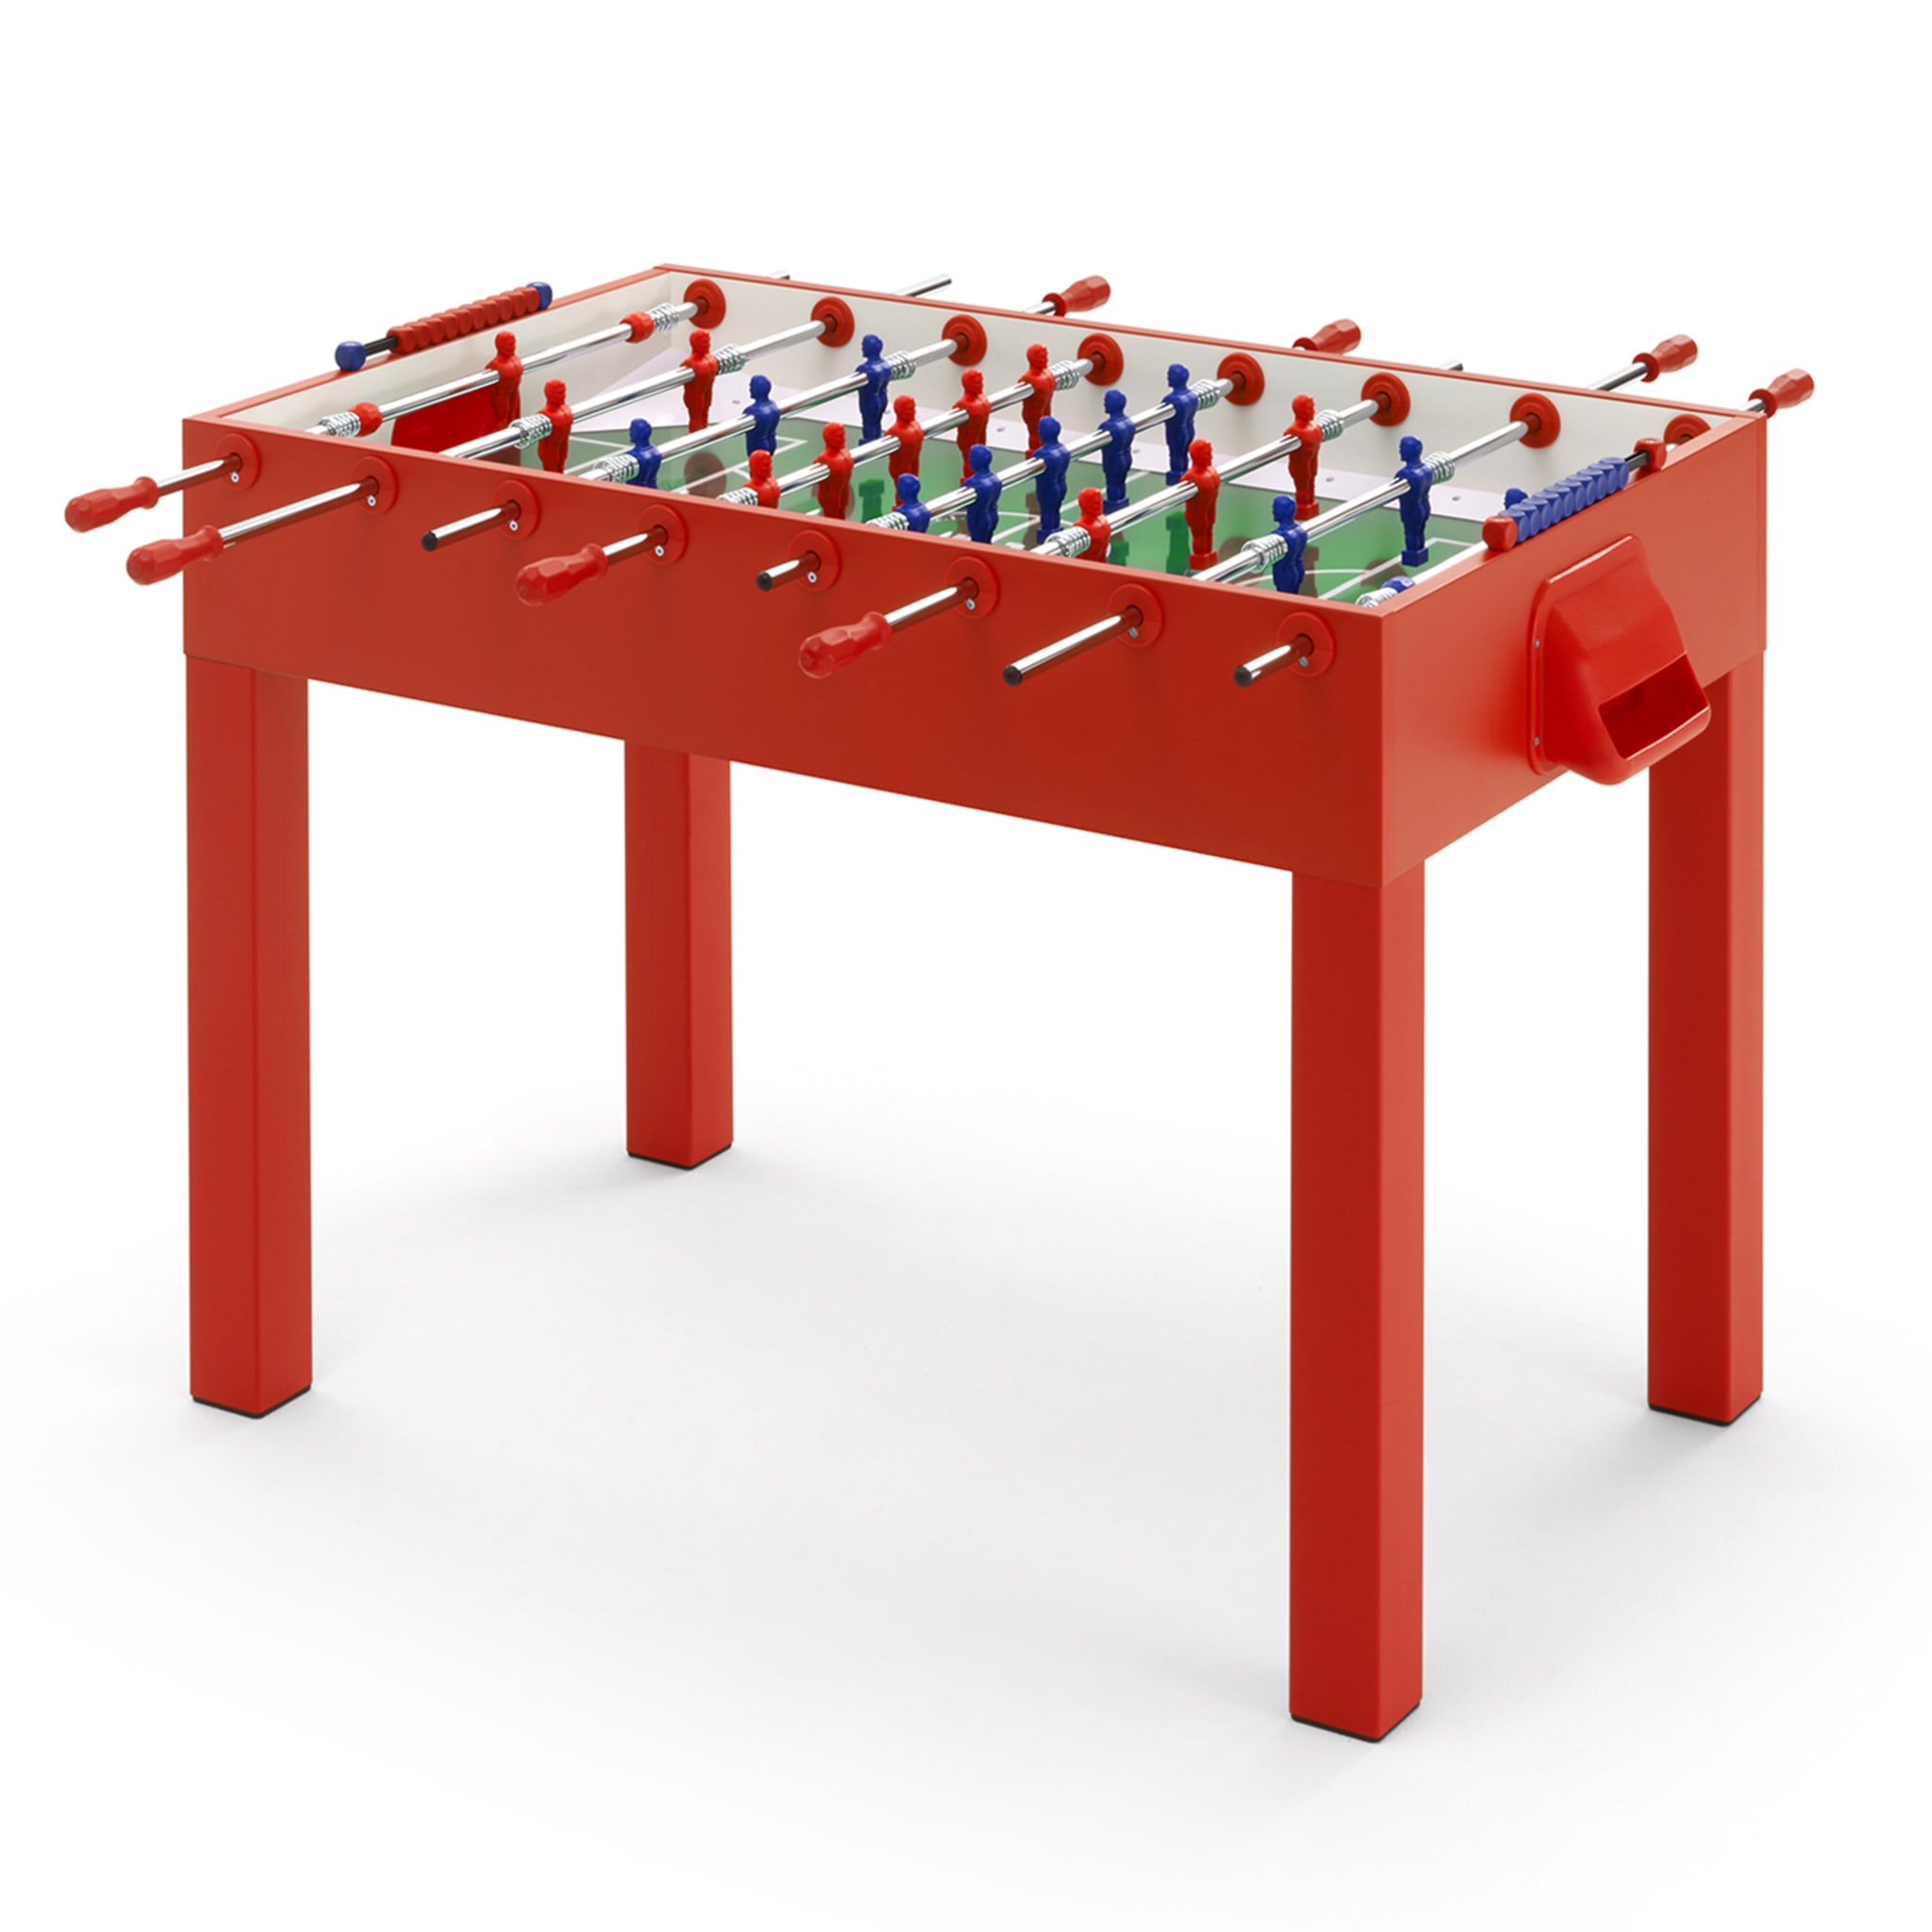 Fido Red Foosball Table by Basaglia + Rota Nodari - Alternative view 1